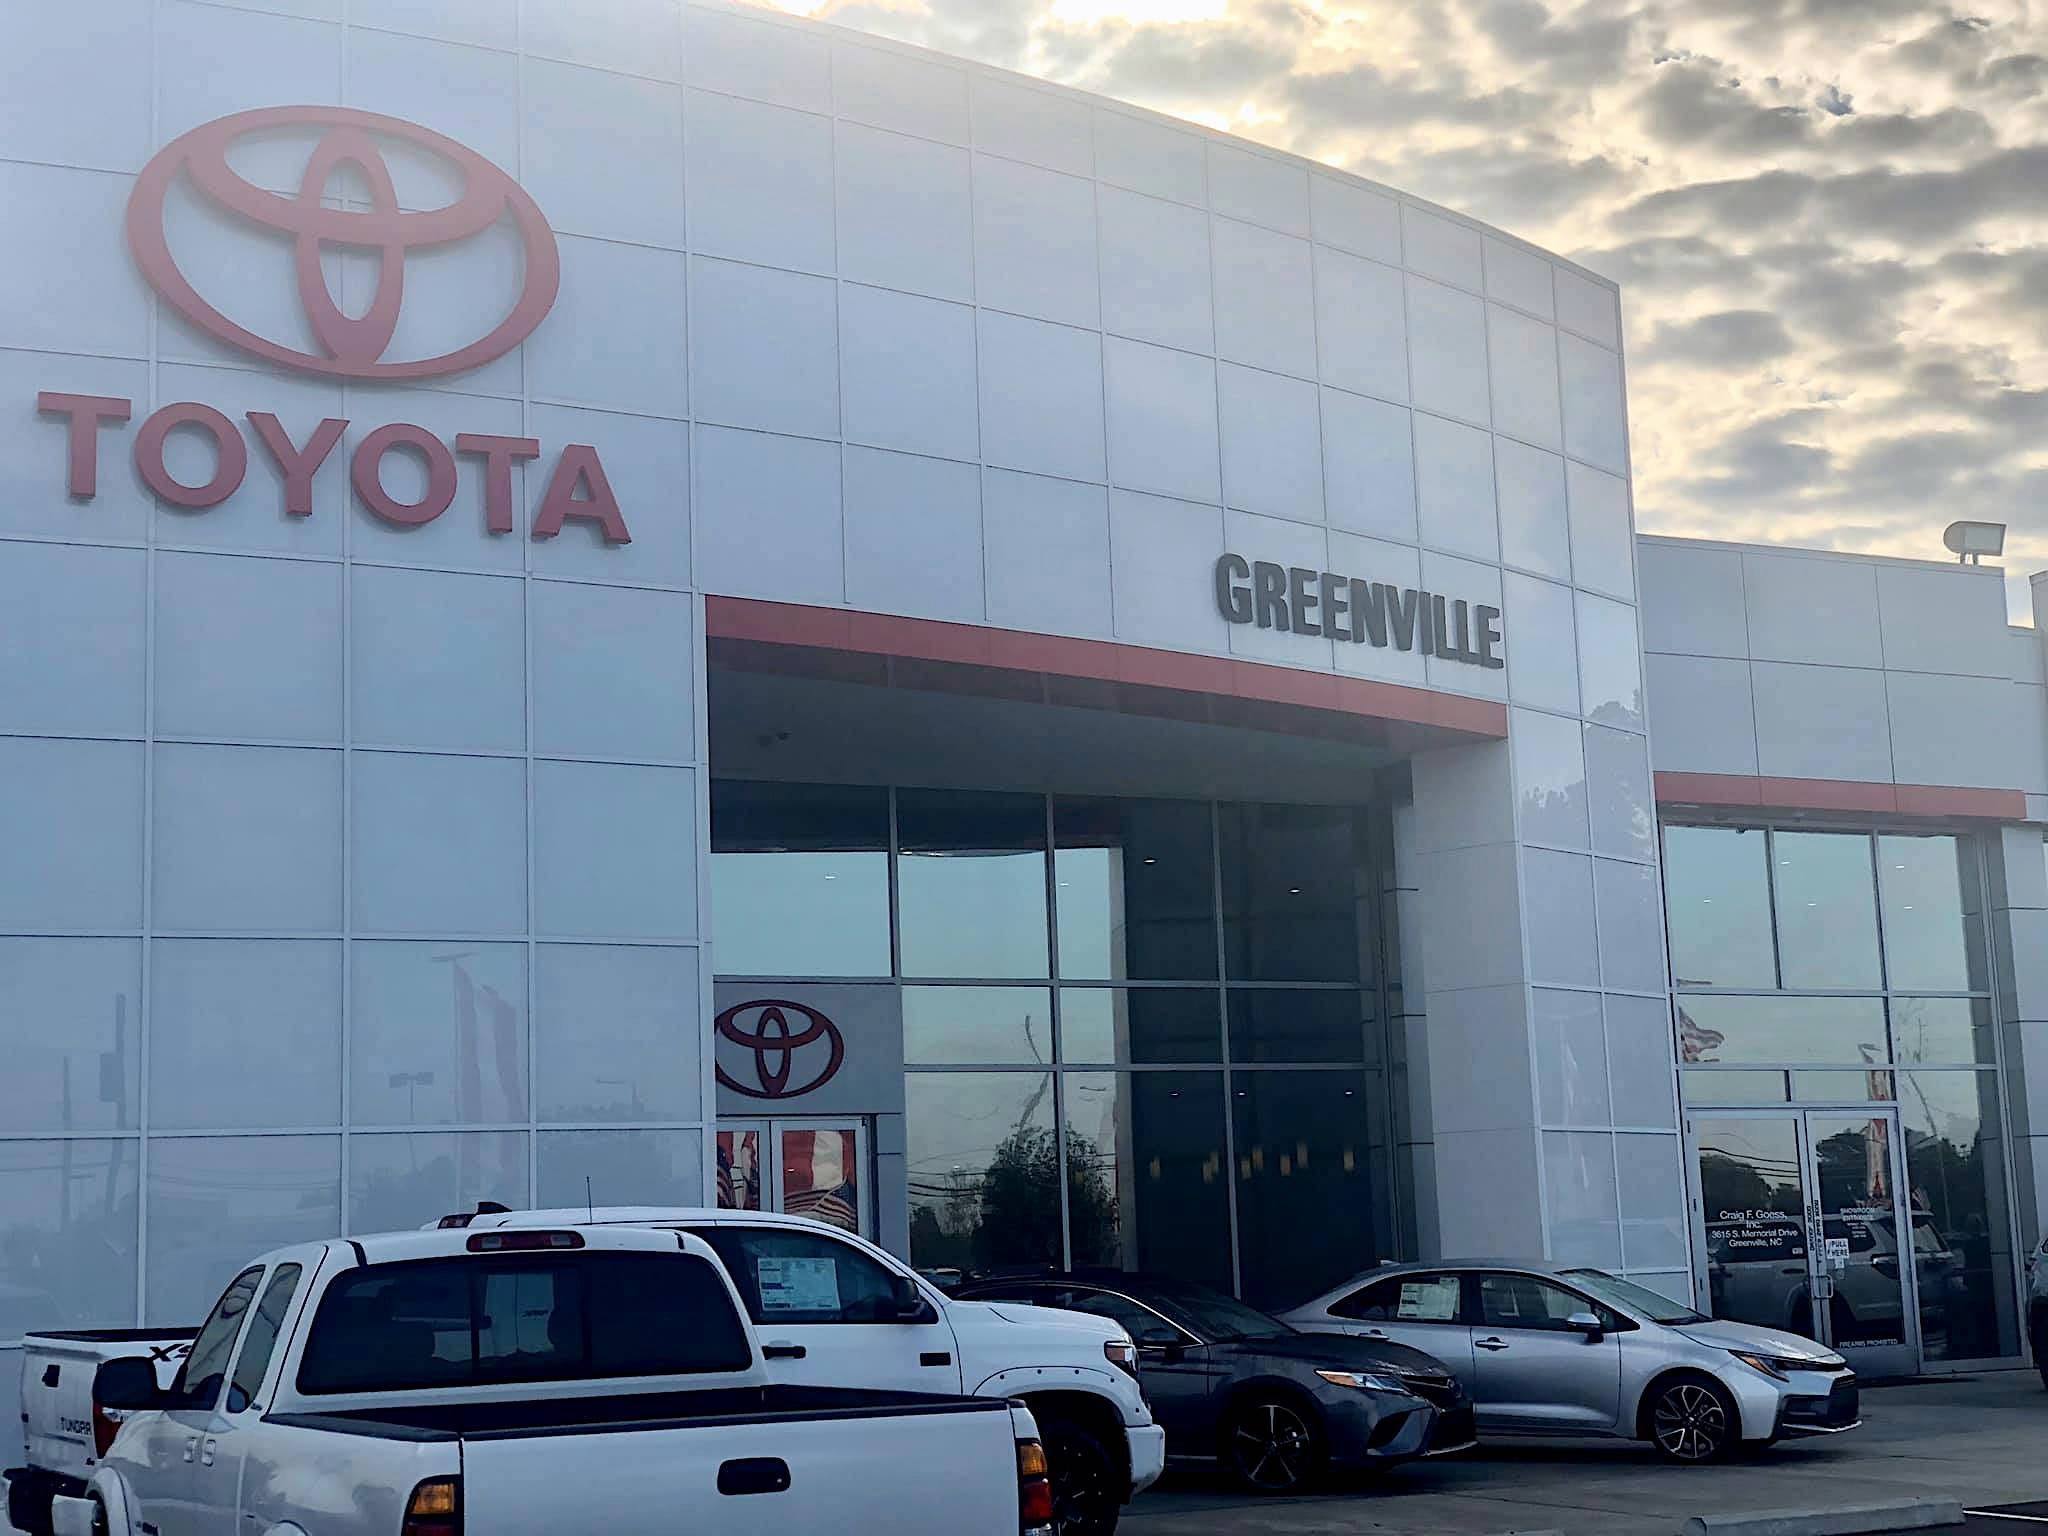 Greenville Toyota near Wilson and Washington, North Carolina